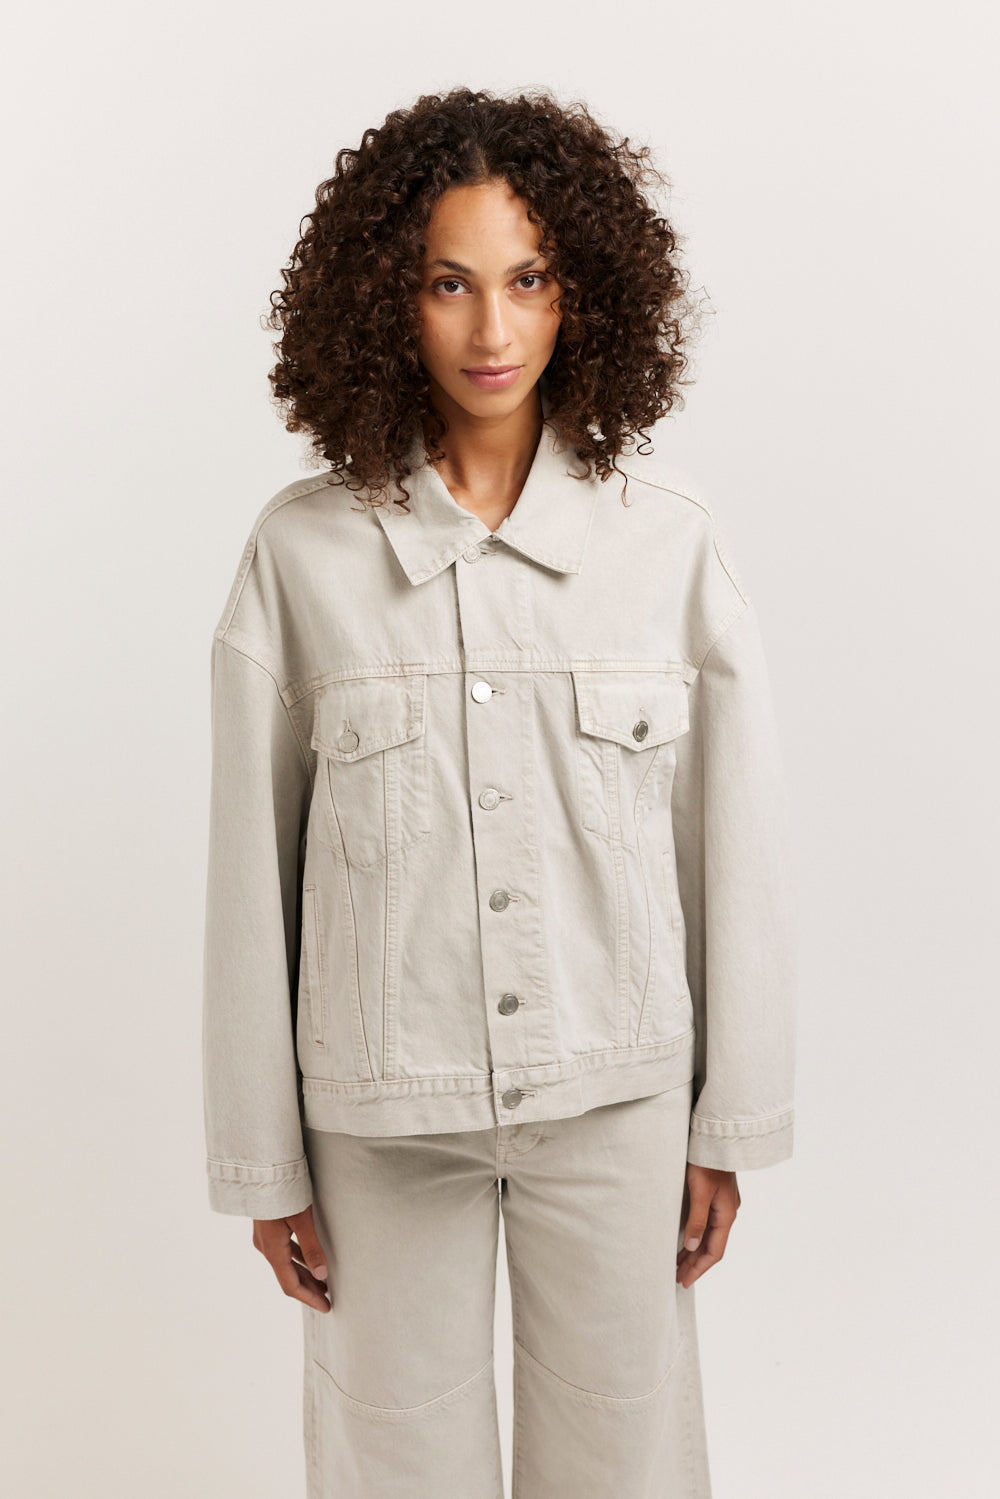 Buy Women's Jackets Denim Short Coatsandjackets Online | Next UK